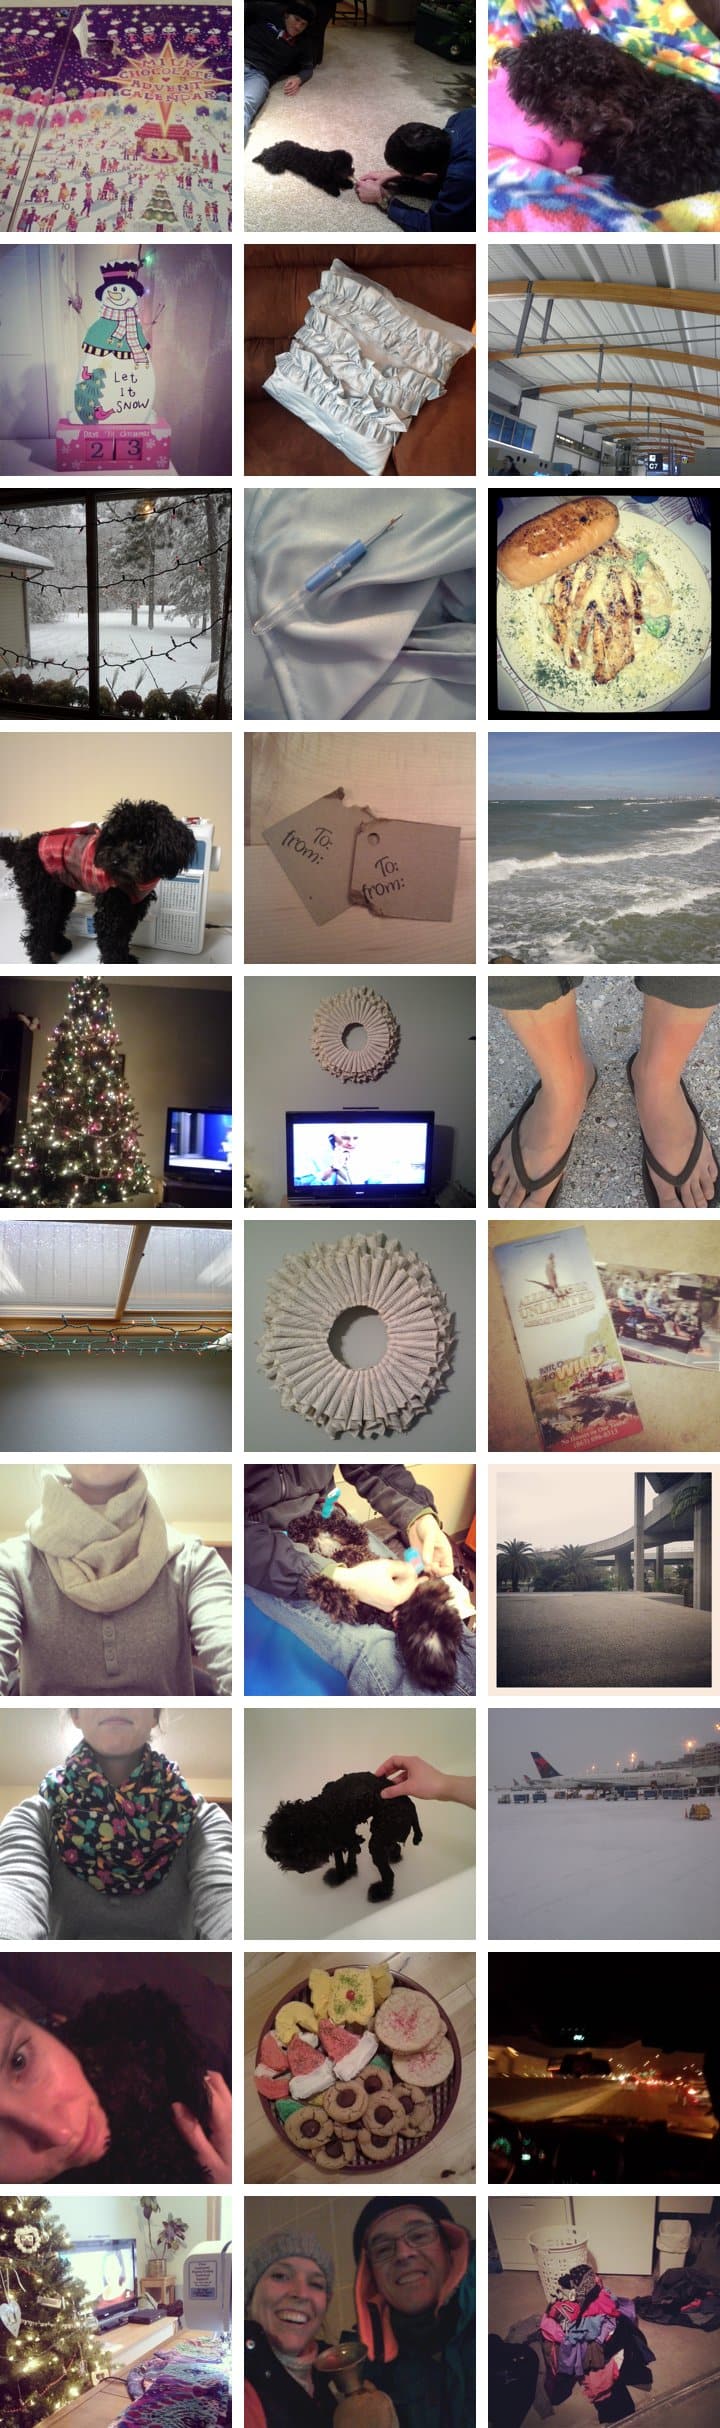 December 2013 – in Instagram Photos